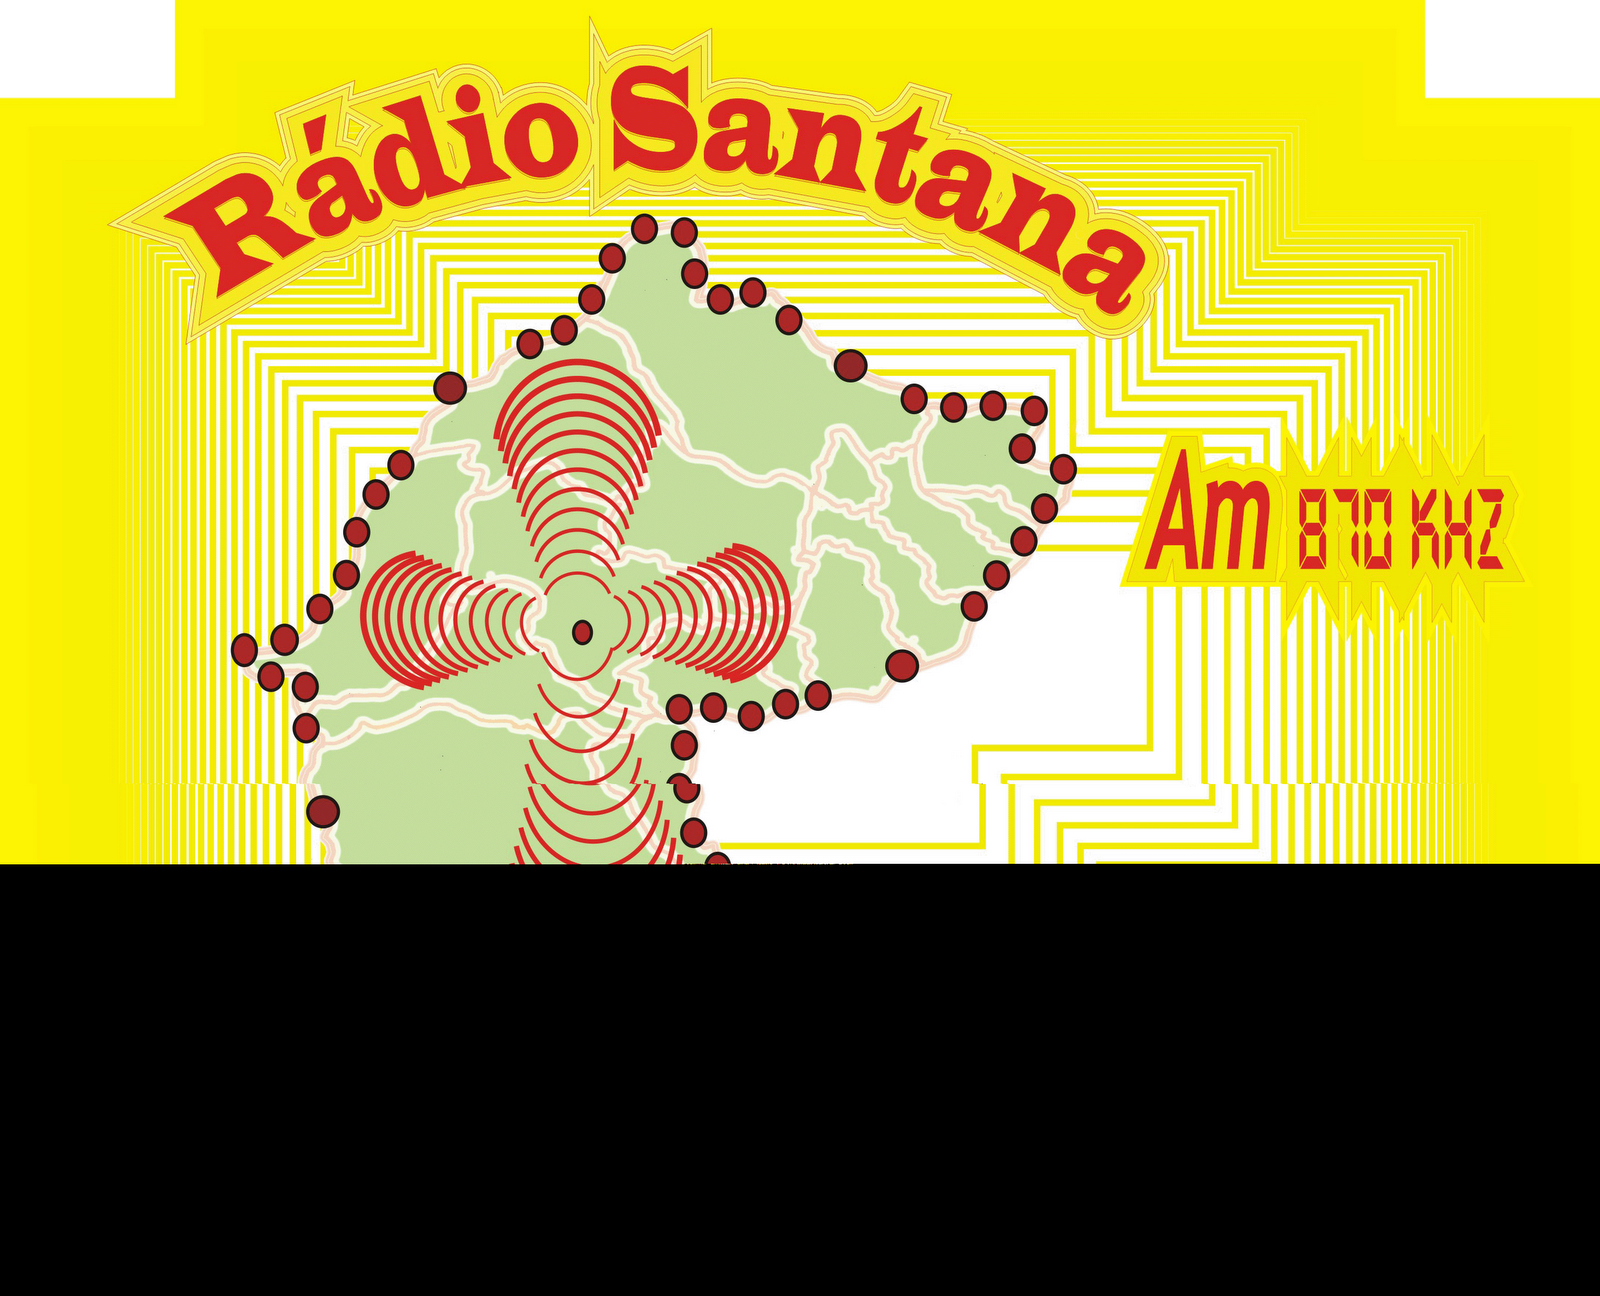 Rádio Santana 870 AM